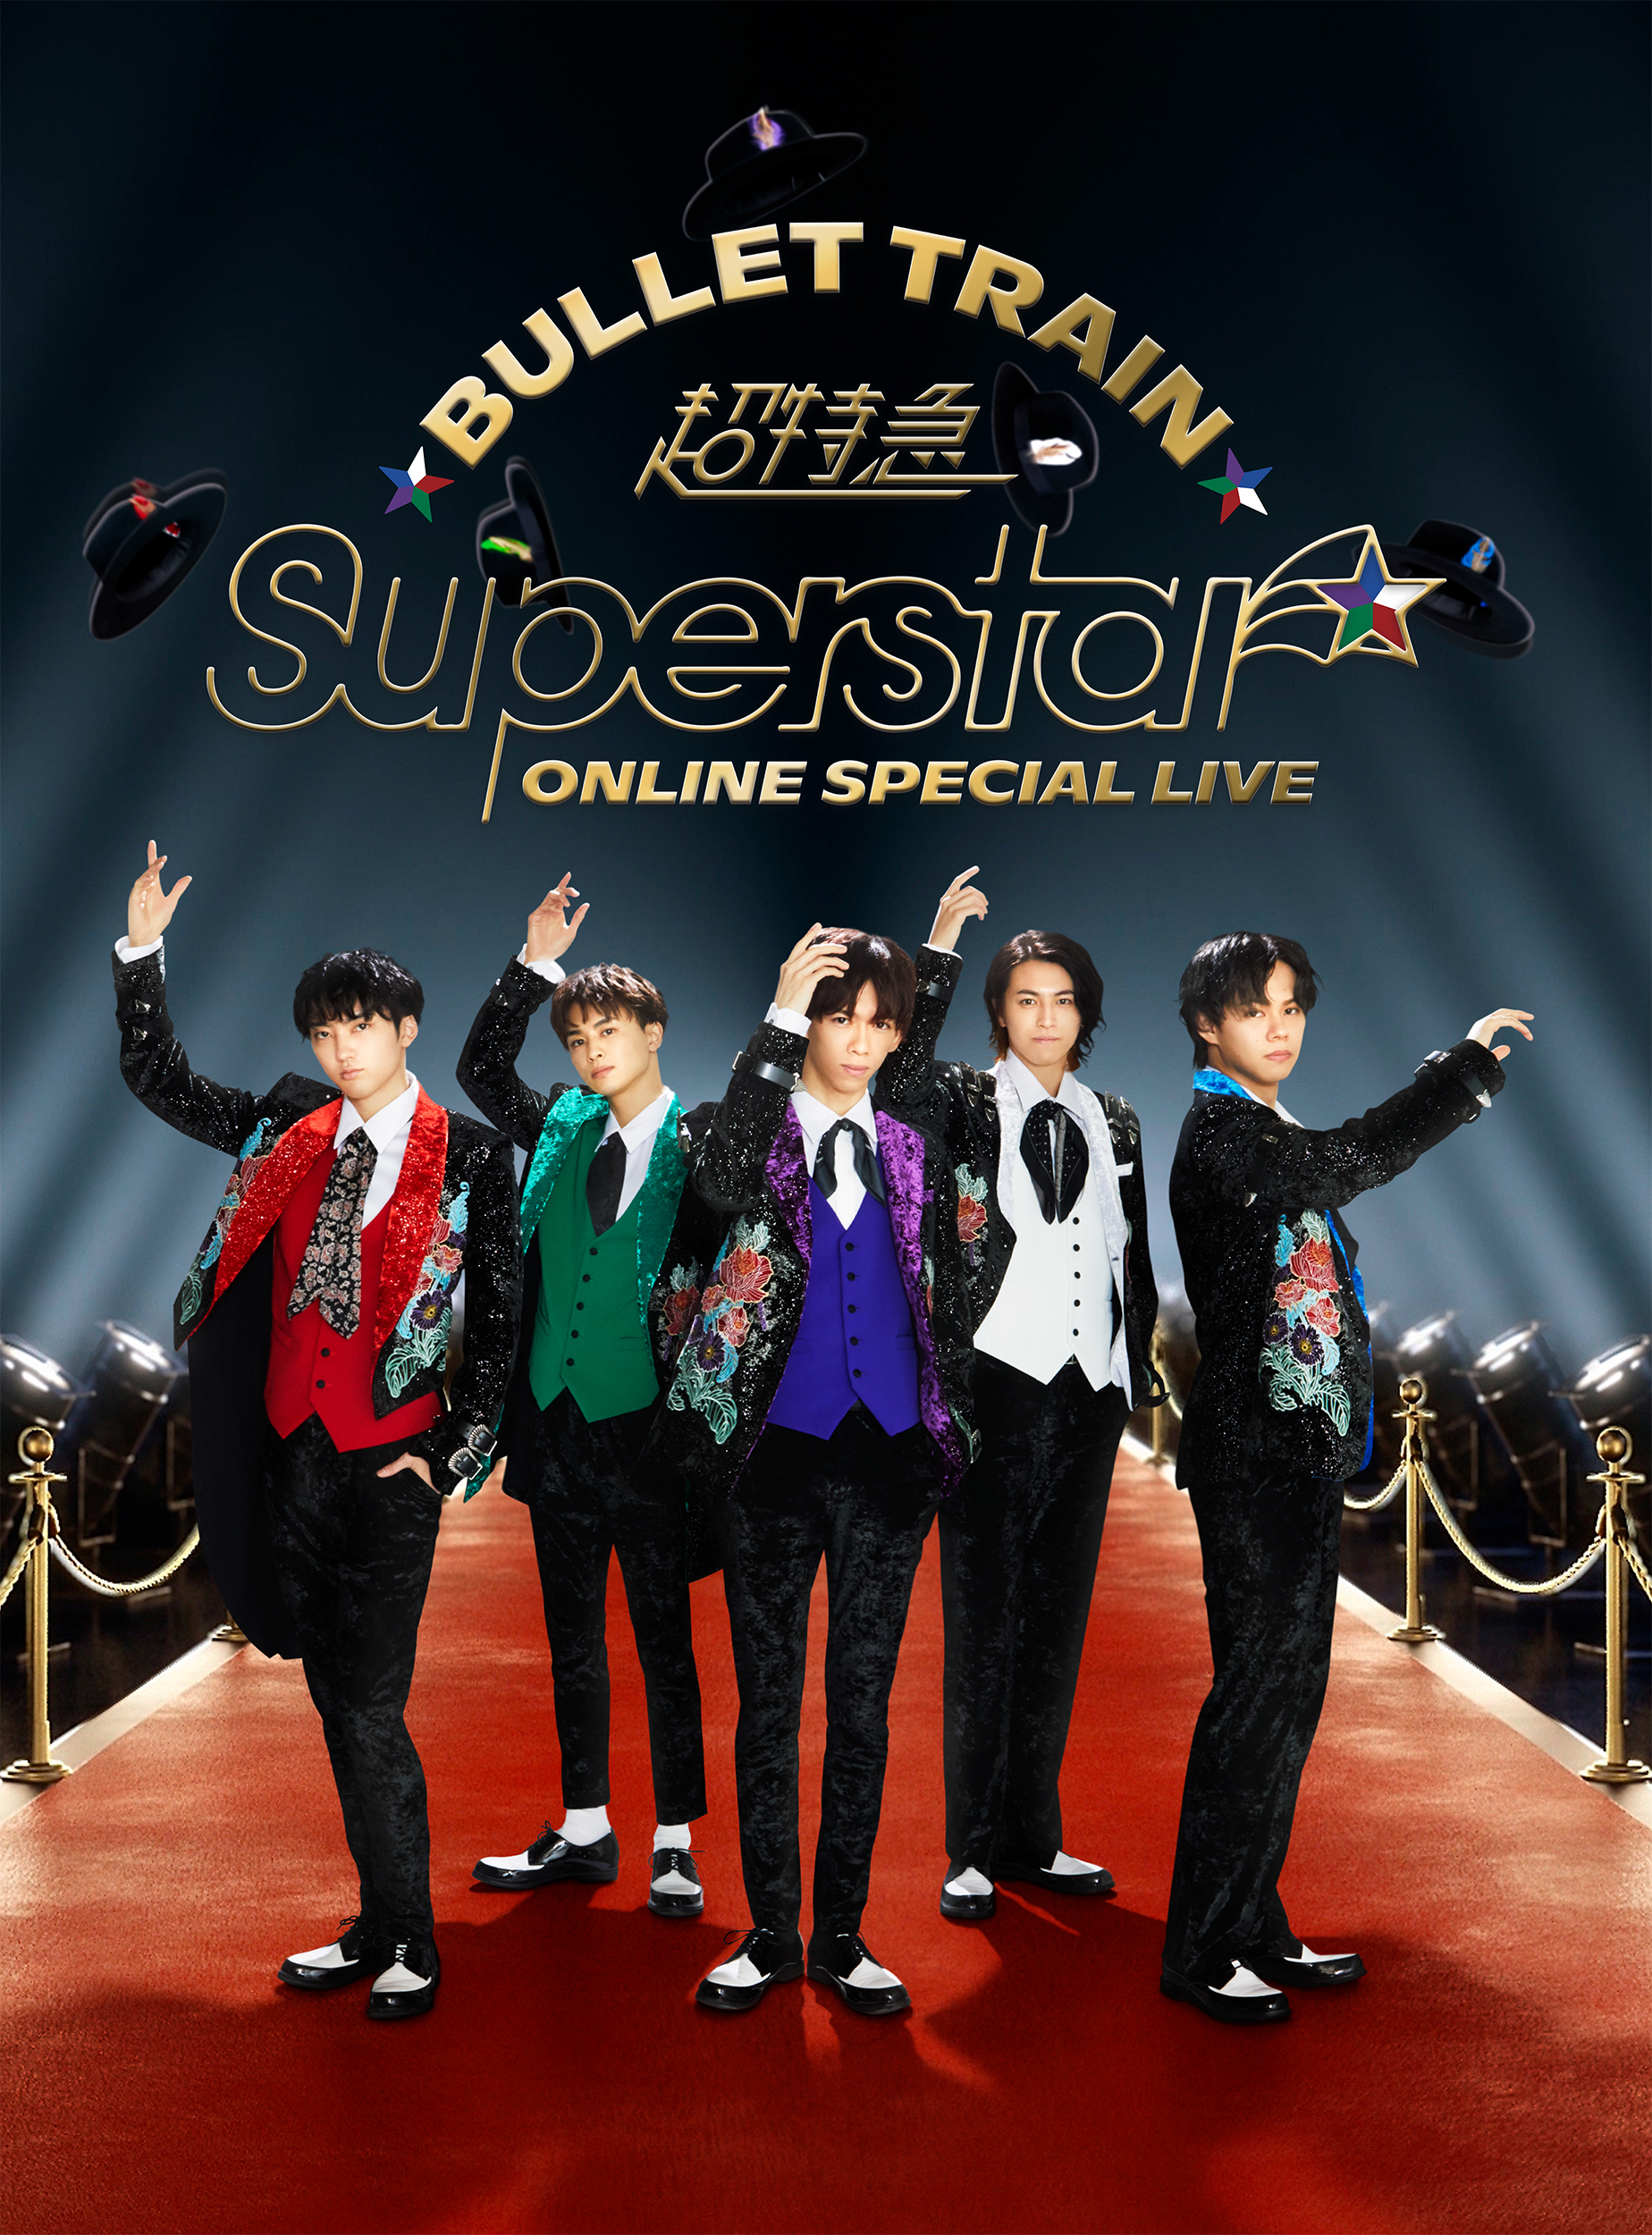 BULLET TRAIN ONLINE SPECIAL LIVE 「Superstar」Blu-ray発売決定